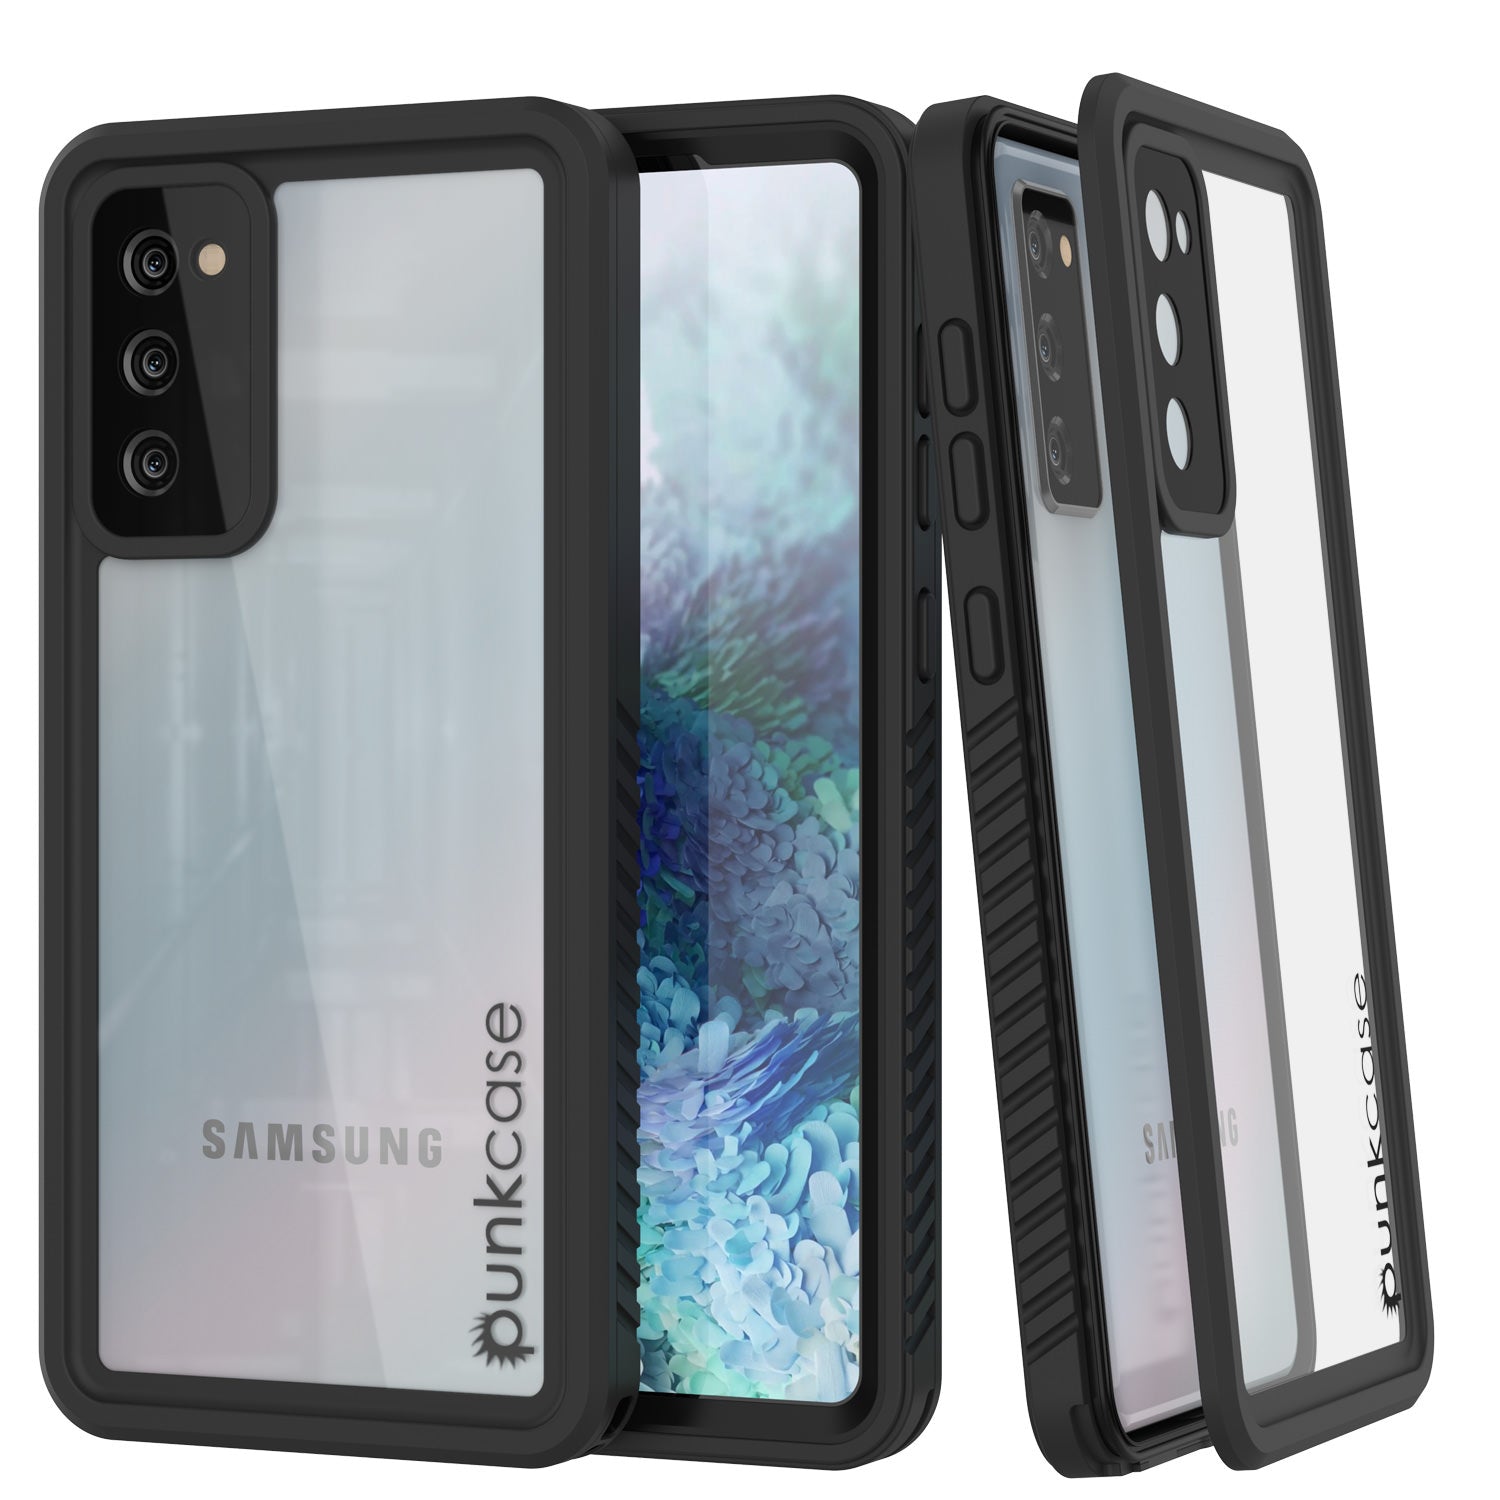 ELEHOLD for Samsung Galaxy S20 FE 5G Waterproof Case, Built-in